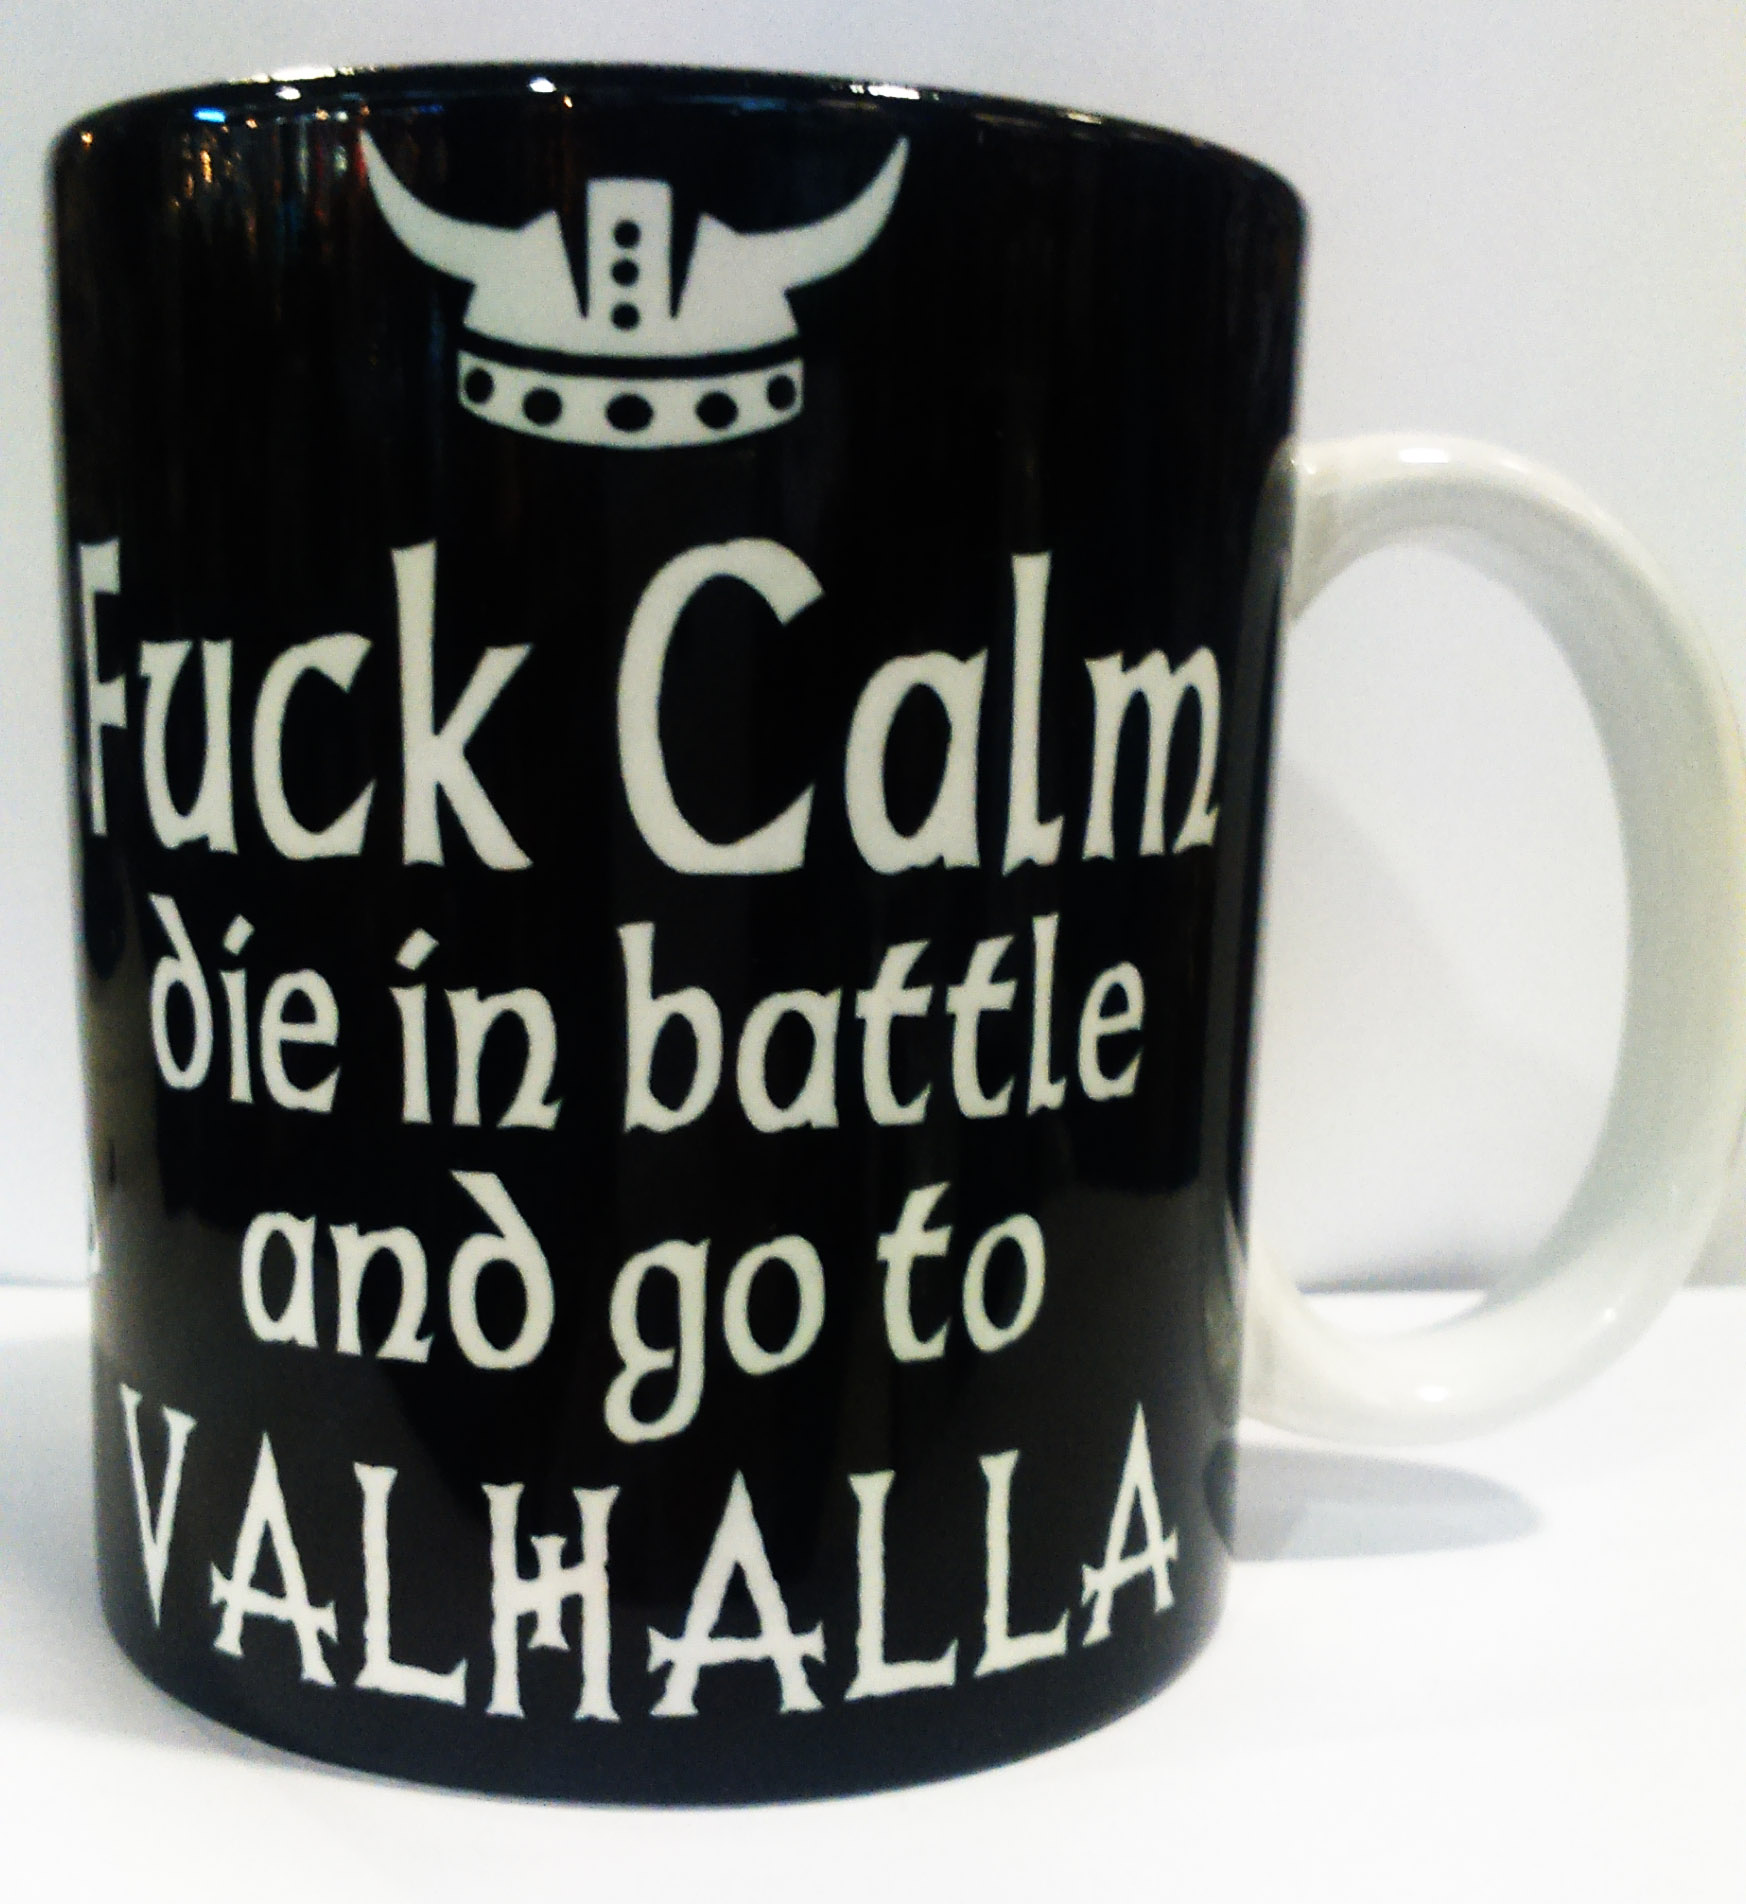 Fuck Calm, die in Battle and go to Valhalla